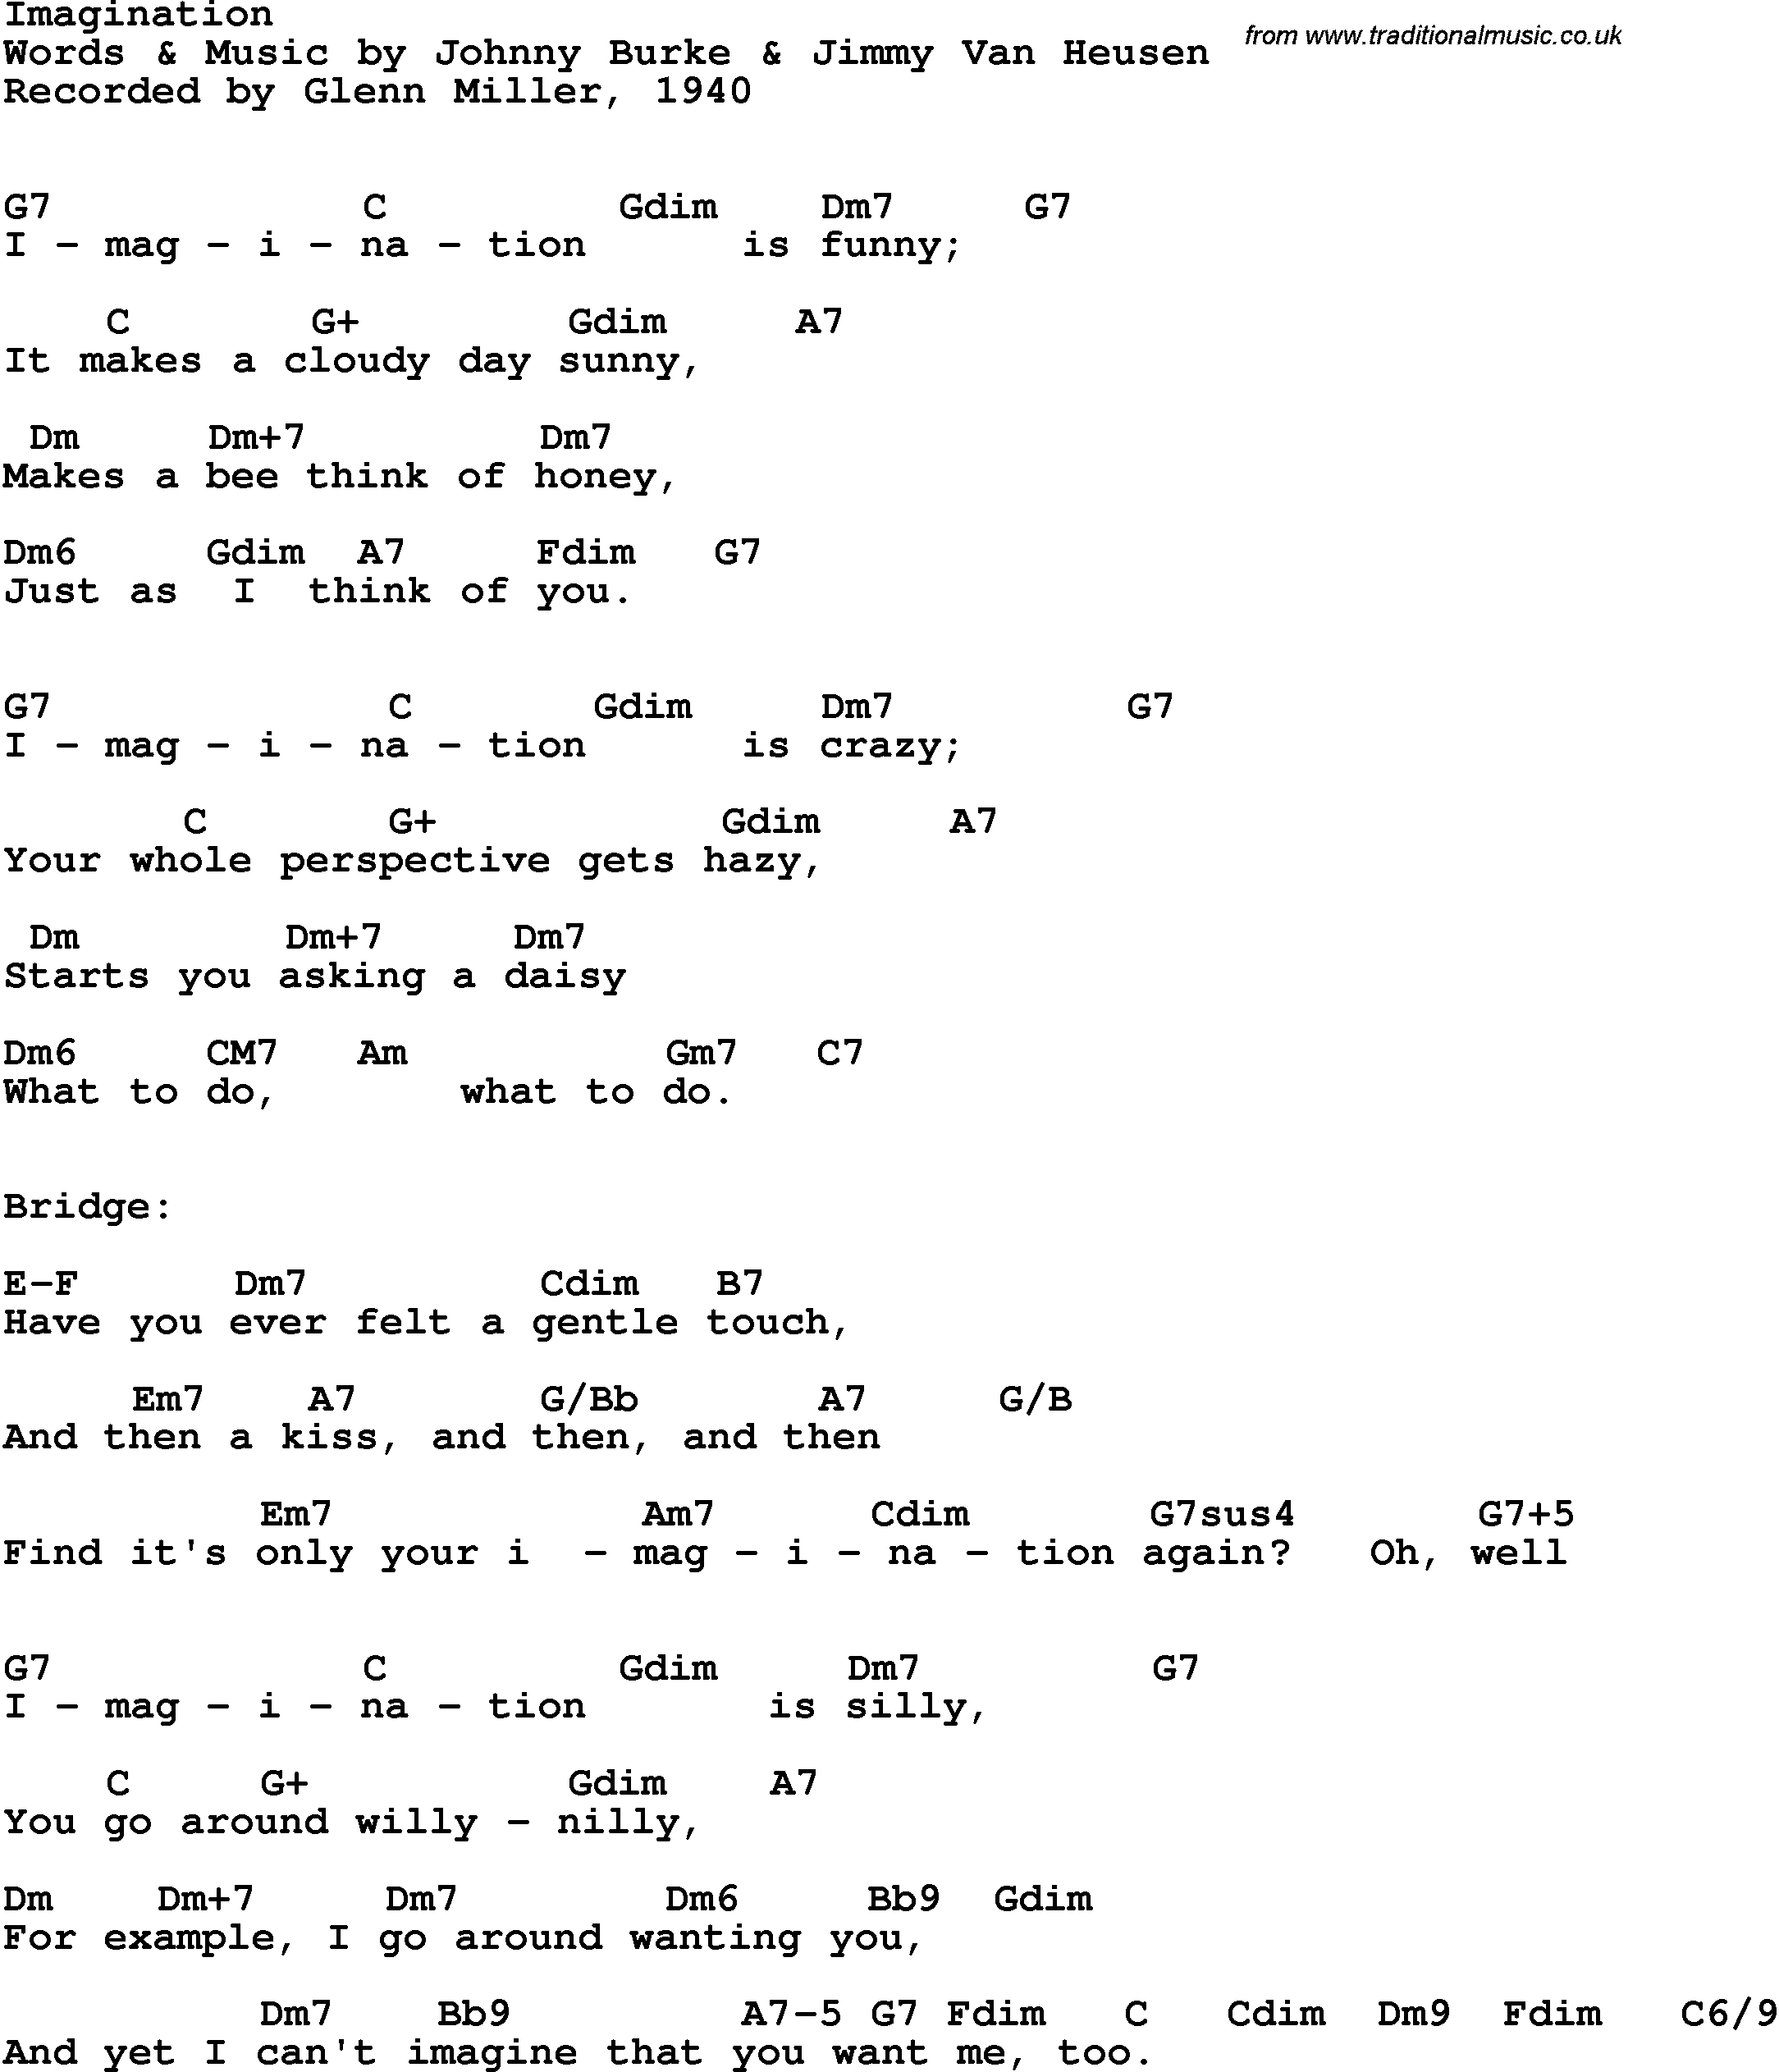 Song Lyrics with guitar chords for Imagination - Glenn Miller, 1940